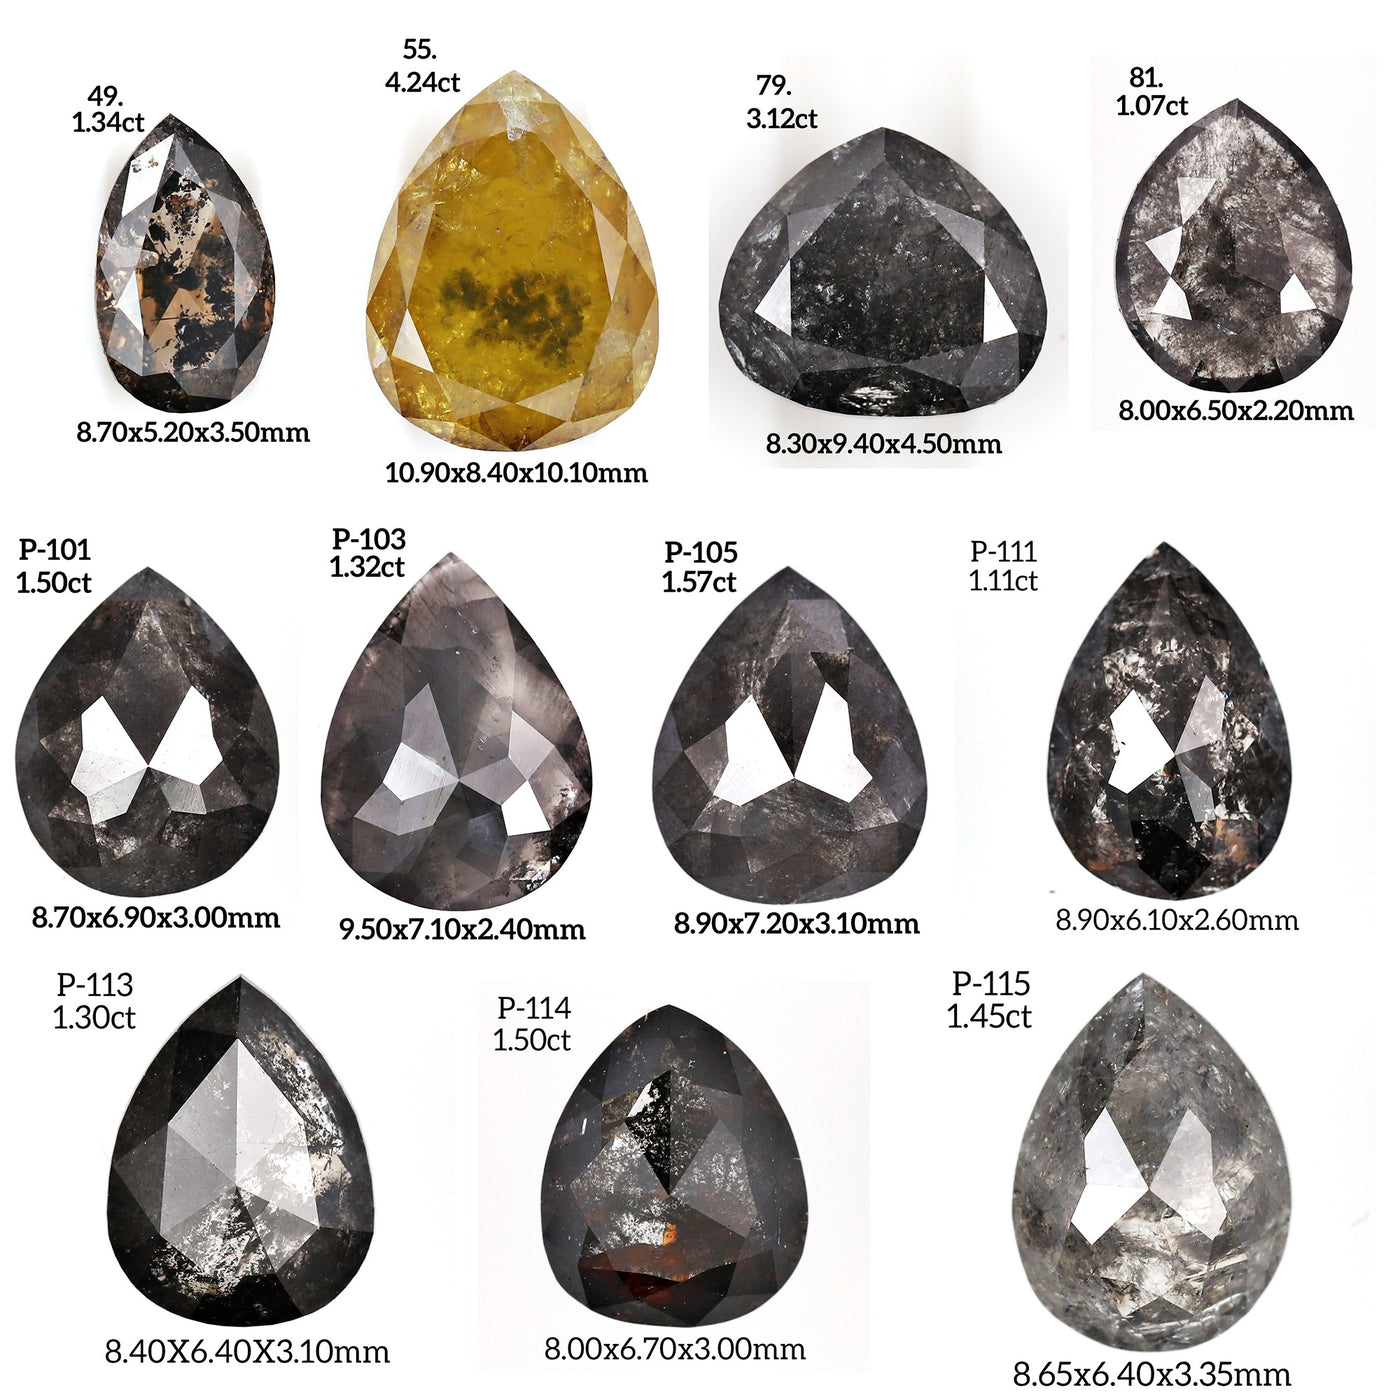 Salt and pepper diamond ring | Pear diamond ring | 14K Solid Rose gold Ring | Natural Diamond Ring